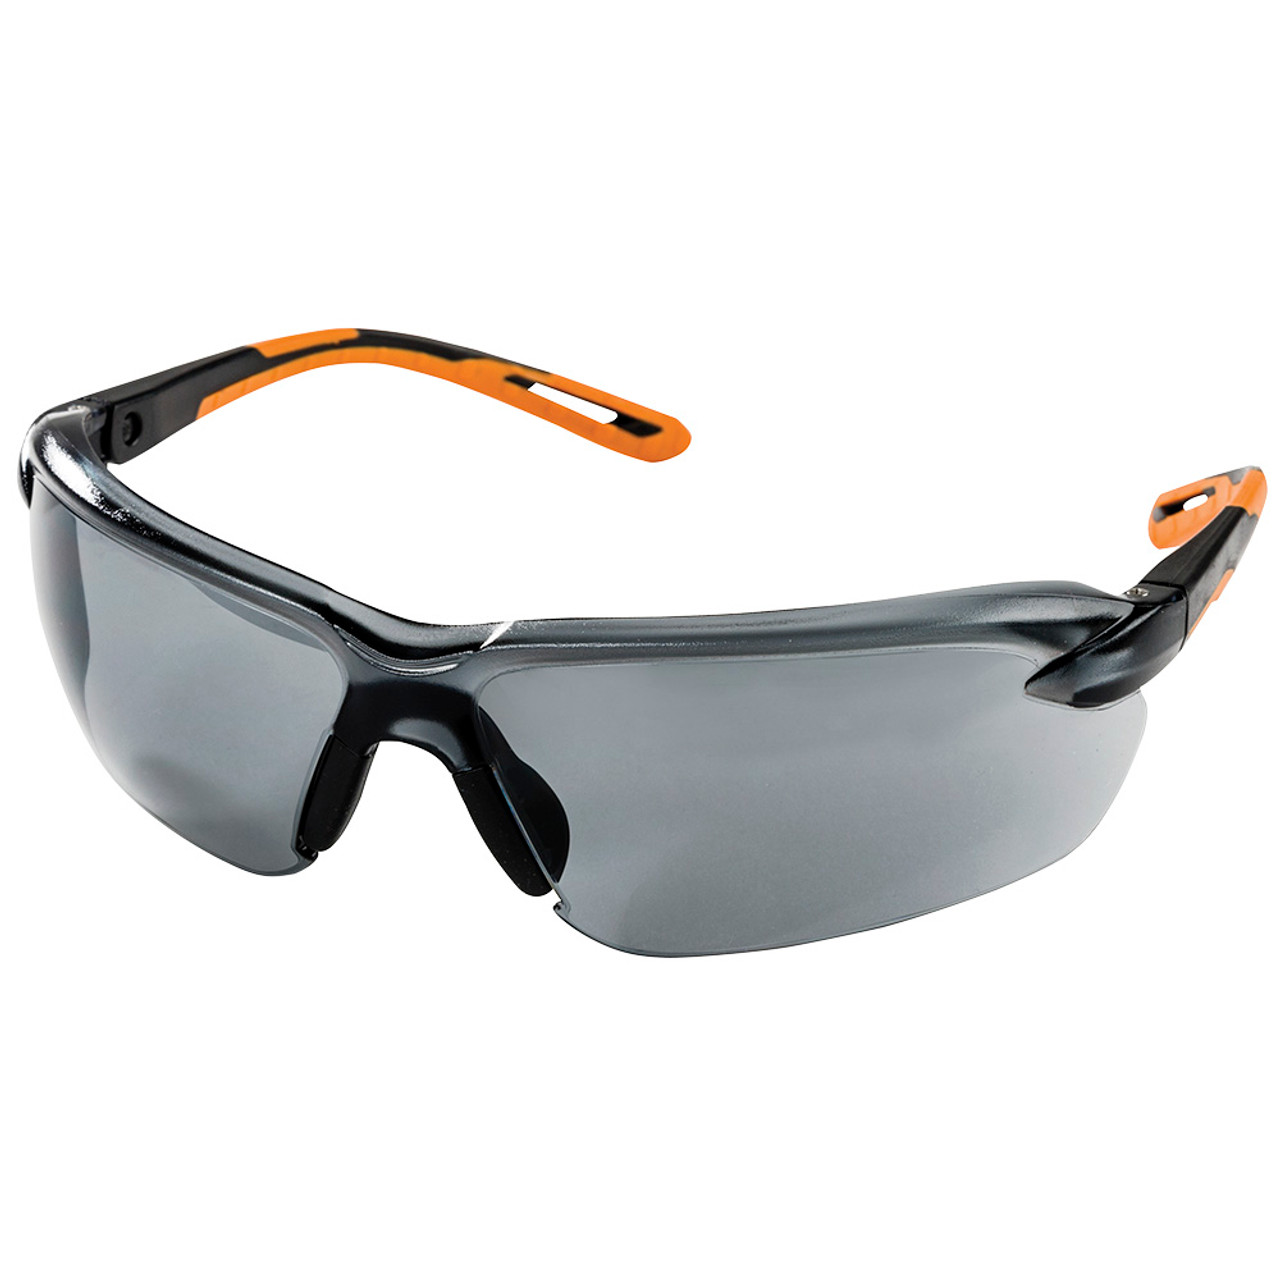 Sellstrom® XM310 Series Hard Coated Wrap Around Safety Glasses - Smoke Tint - Orange-Black Arms  S71201